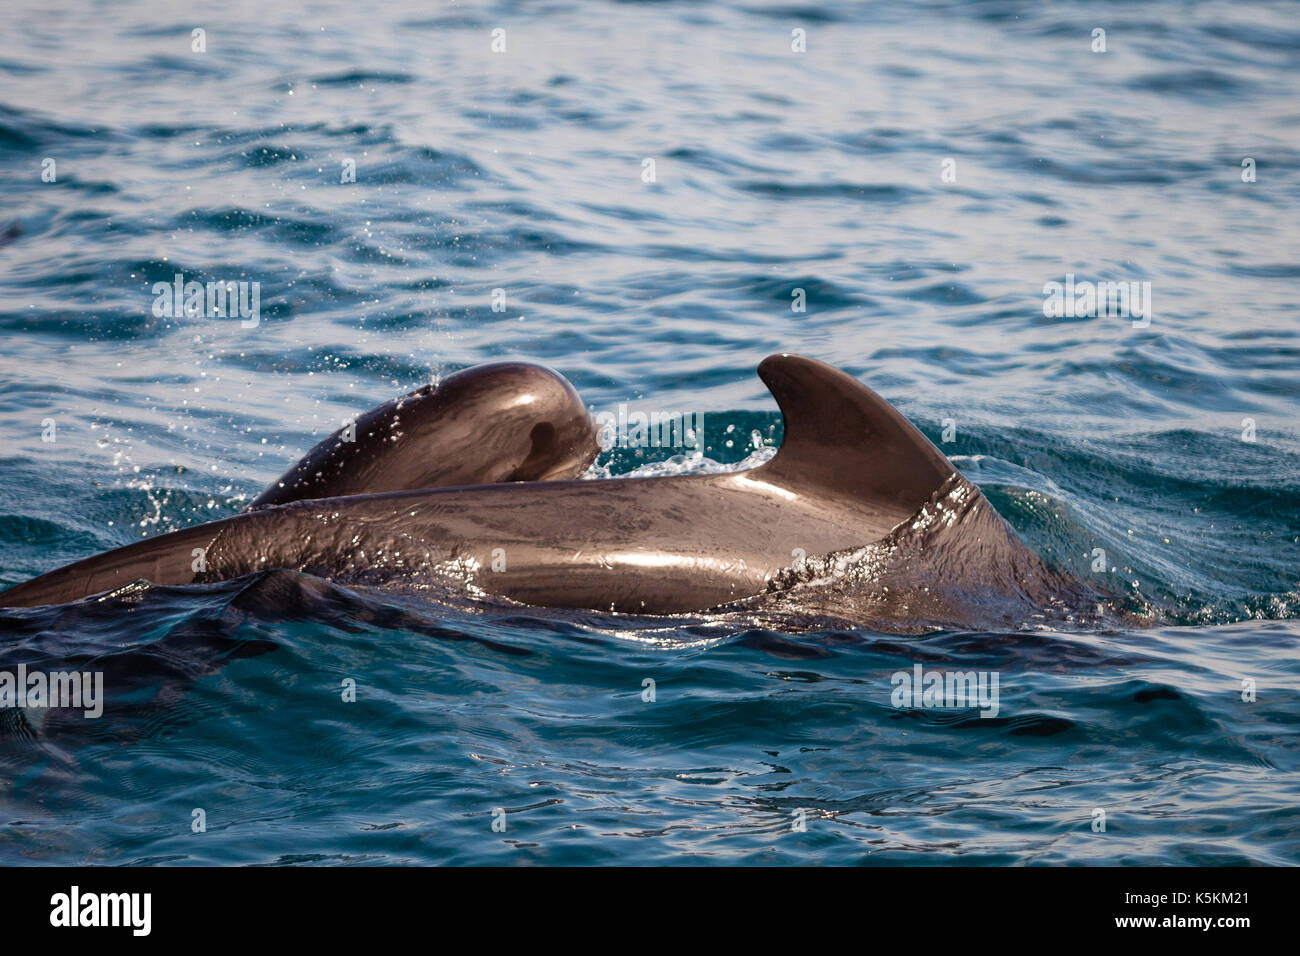 Dolphins and calderon in mediterranean sea Stock Photo